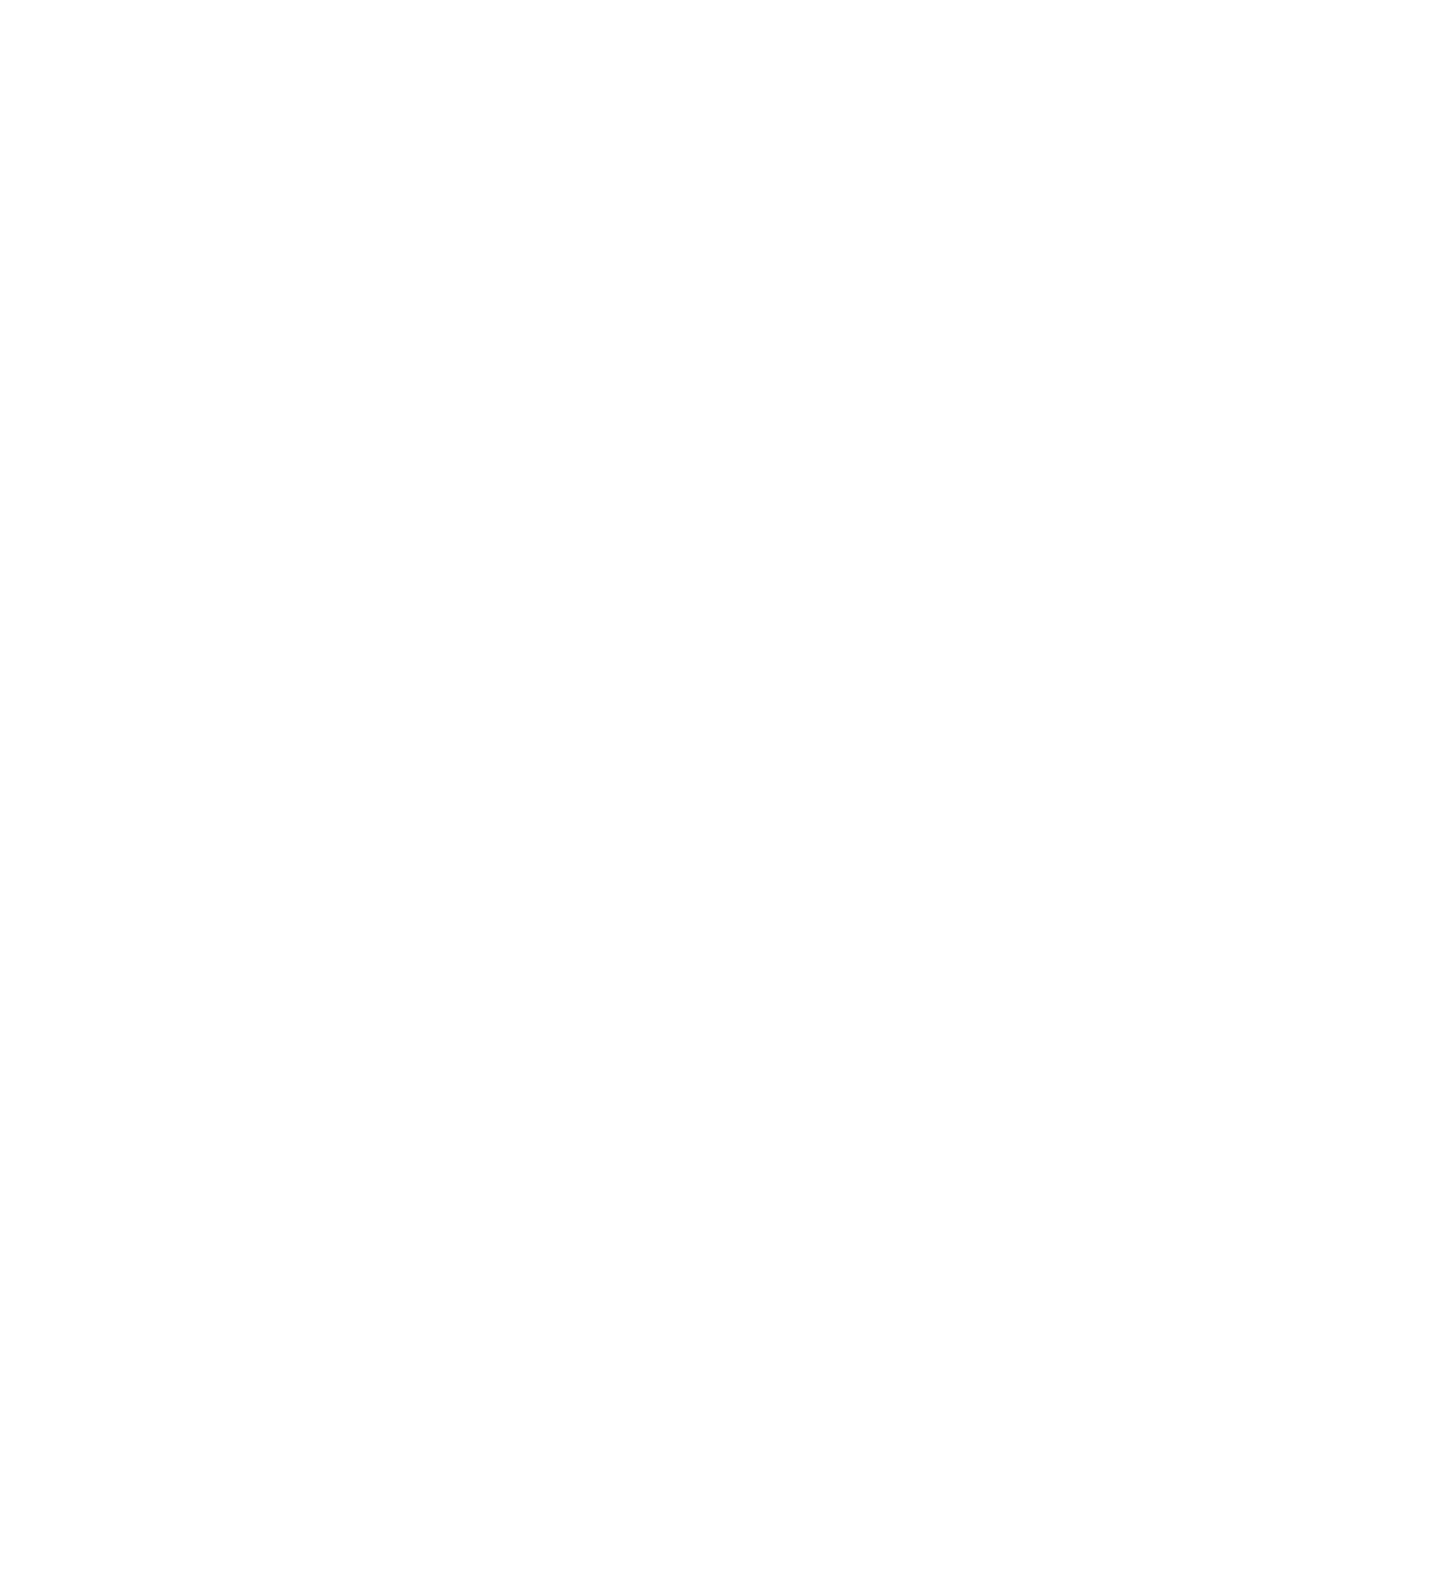 Bank of Communications logo for dark backgrounds (transparent PNG)